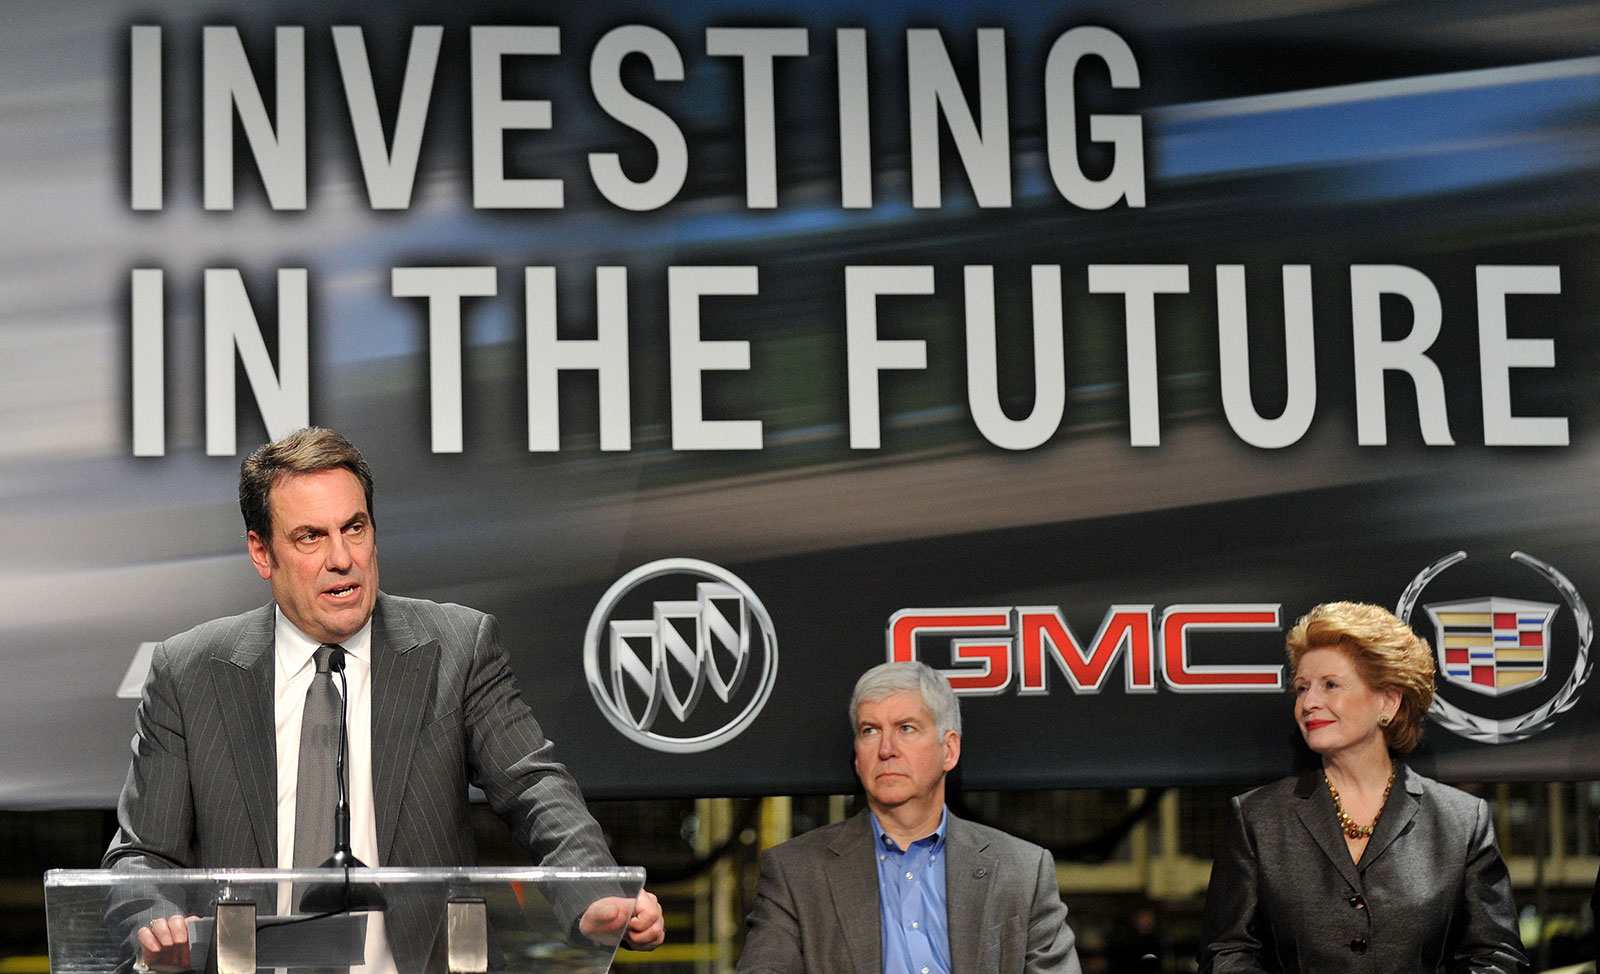 GM spends big money to partner